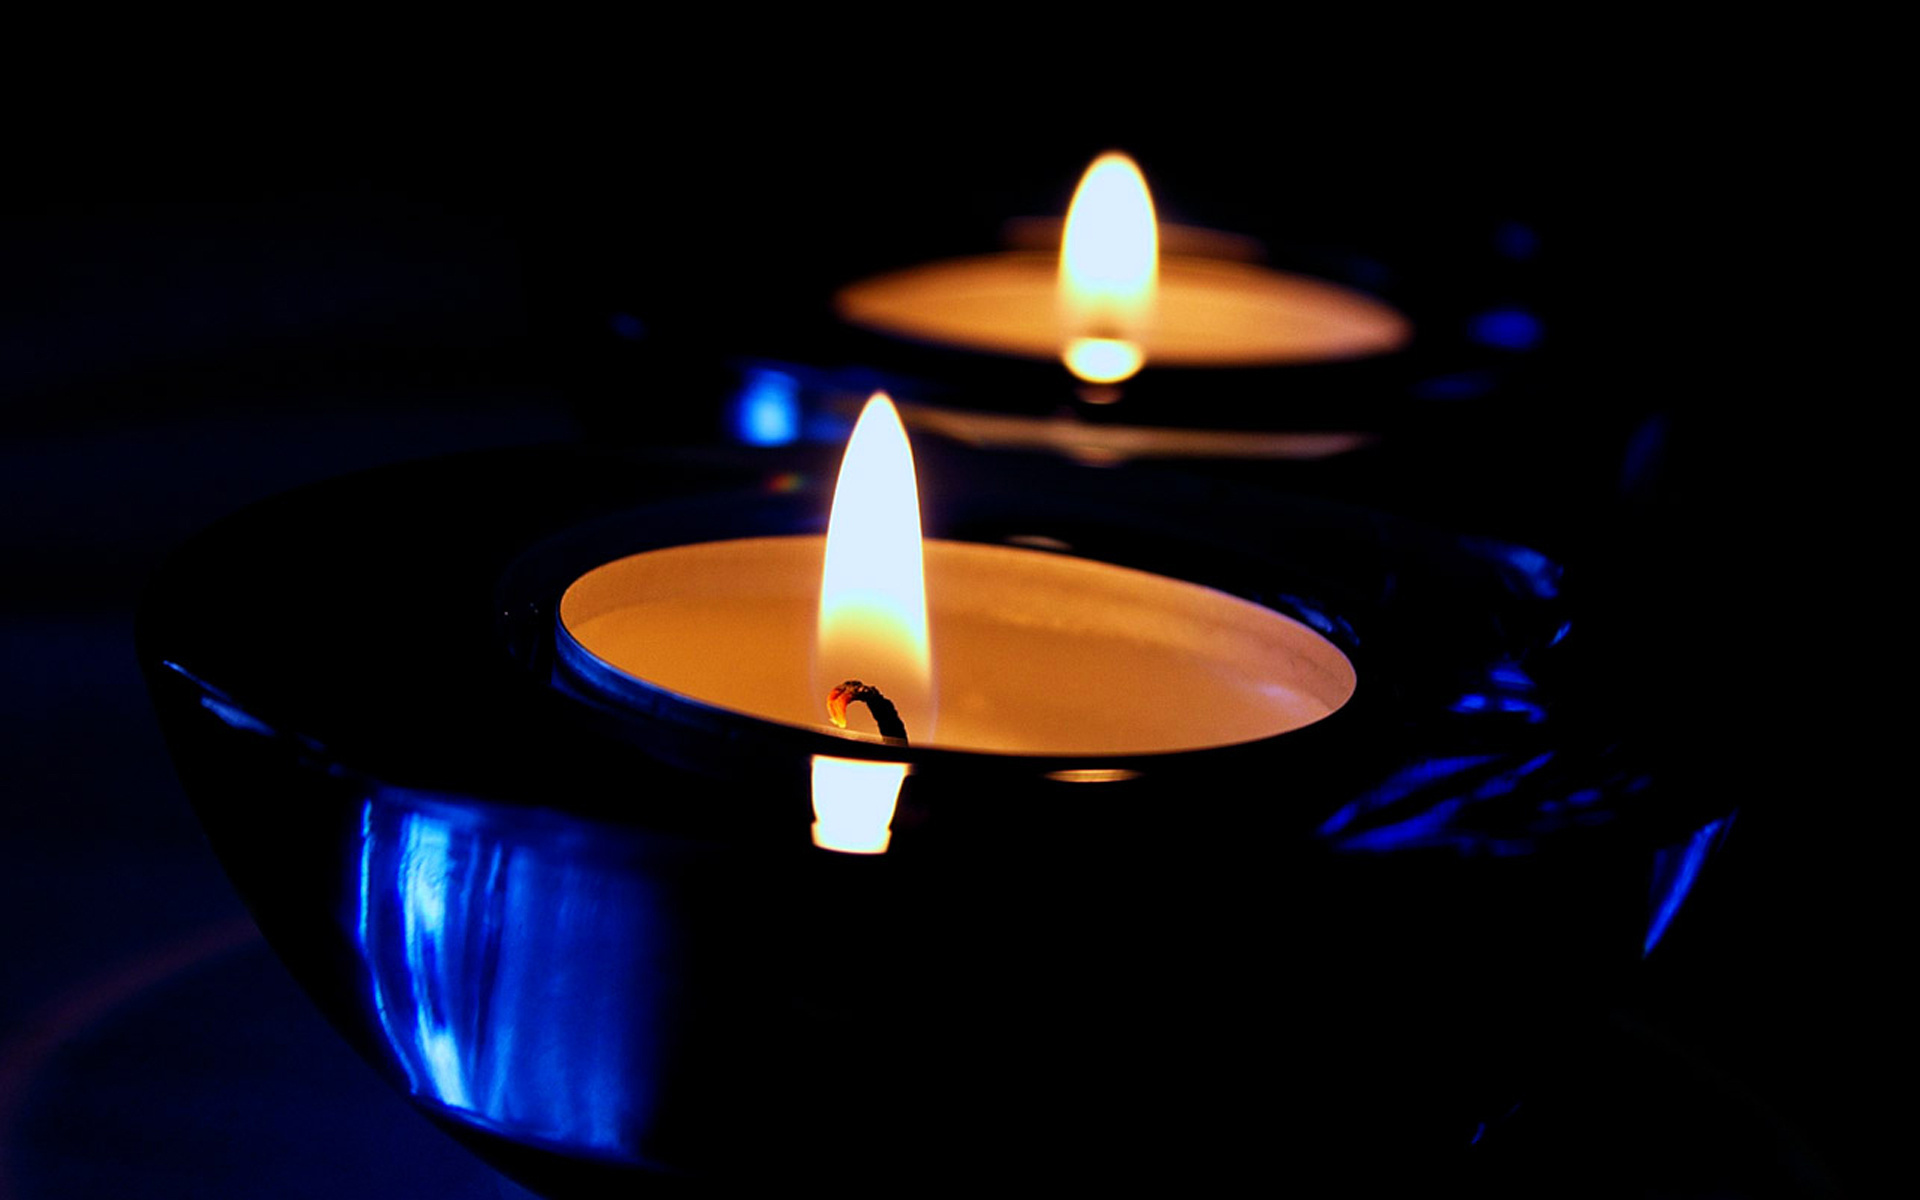 Тихо догорает свеча. Горящая свеча. Горящие свечи. Свеча в темноте. Романтические свечи.